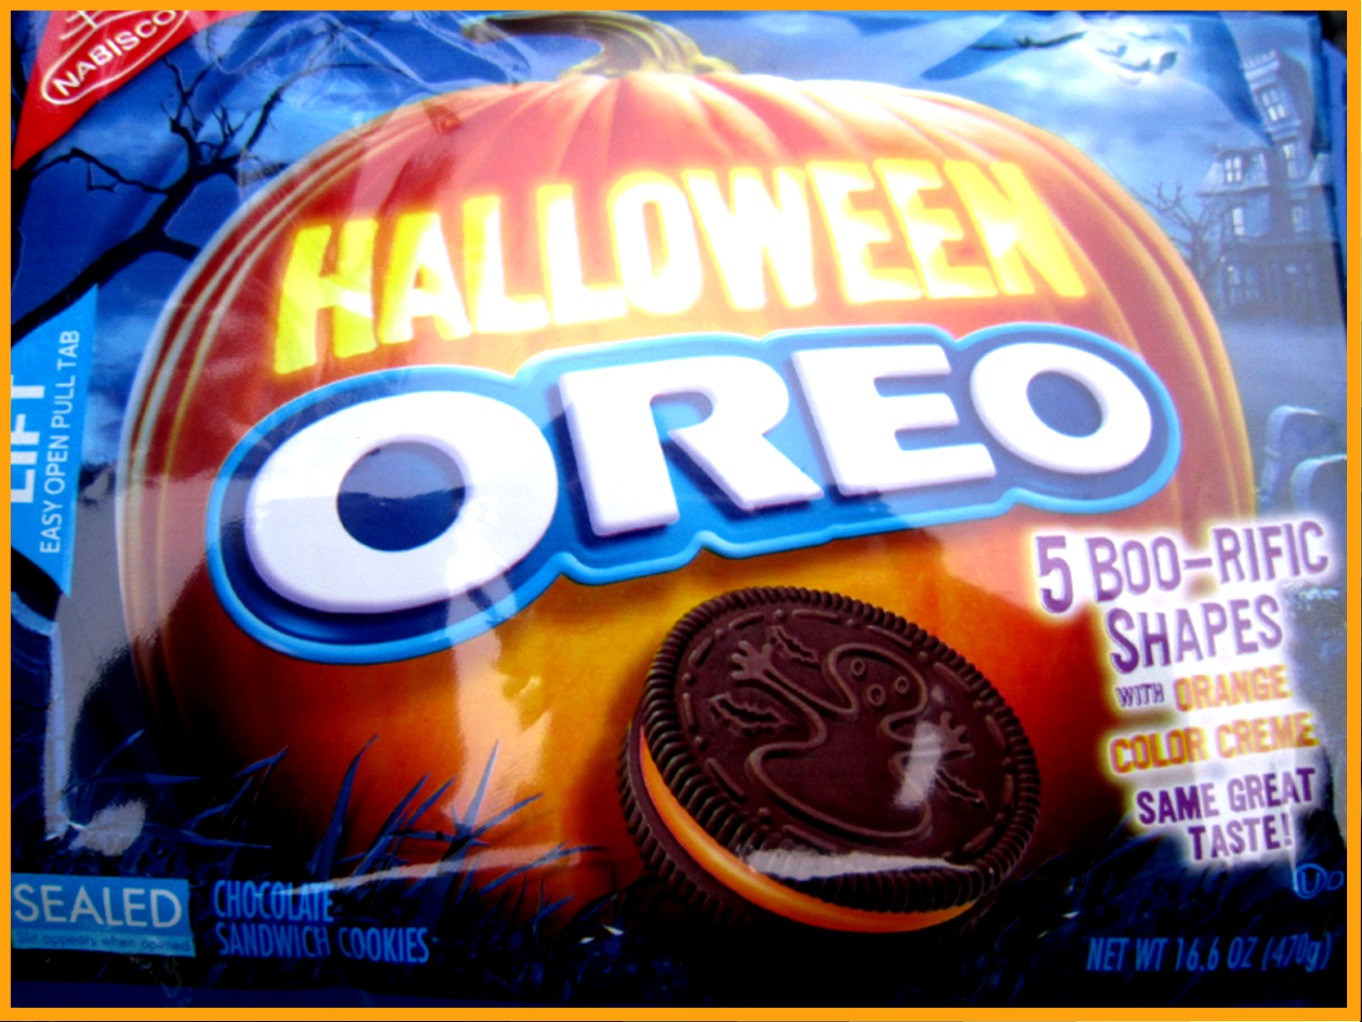 Halloween Oreo Cookies
 The Holidaze Halloween Oreo Cookies